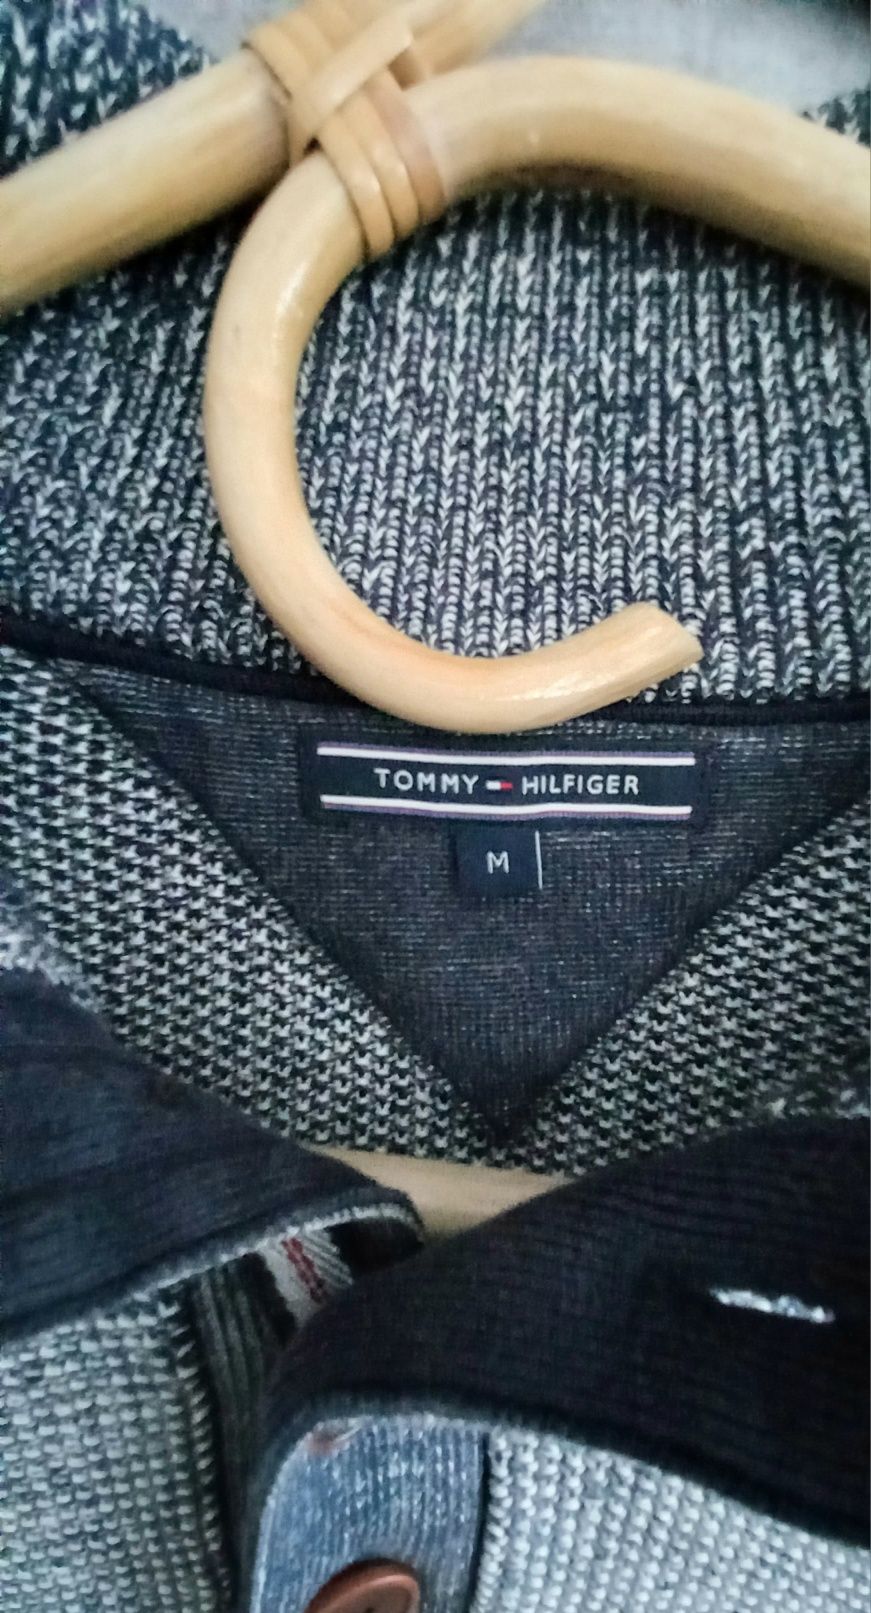 Sweter bluza Tommy Hilfiger, rozmiar M. Stan bdb.